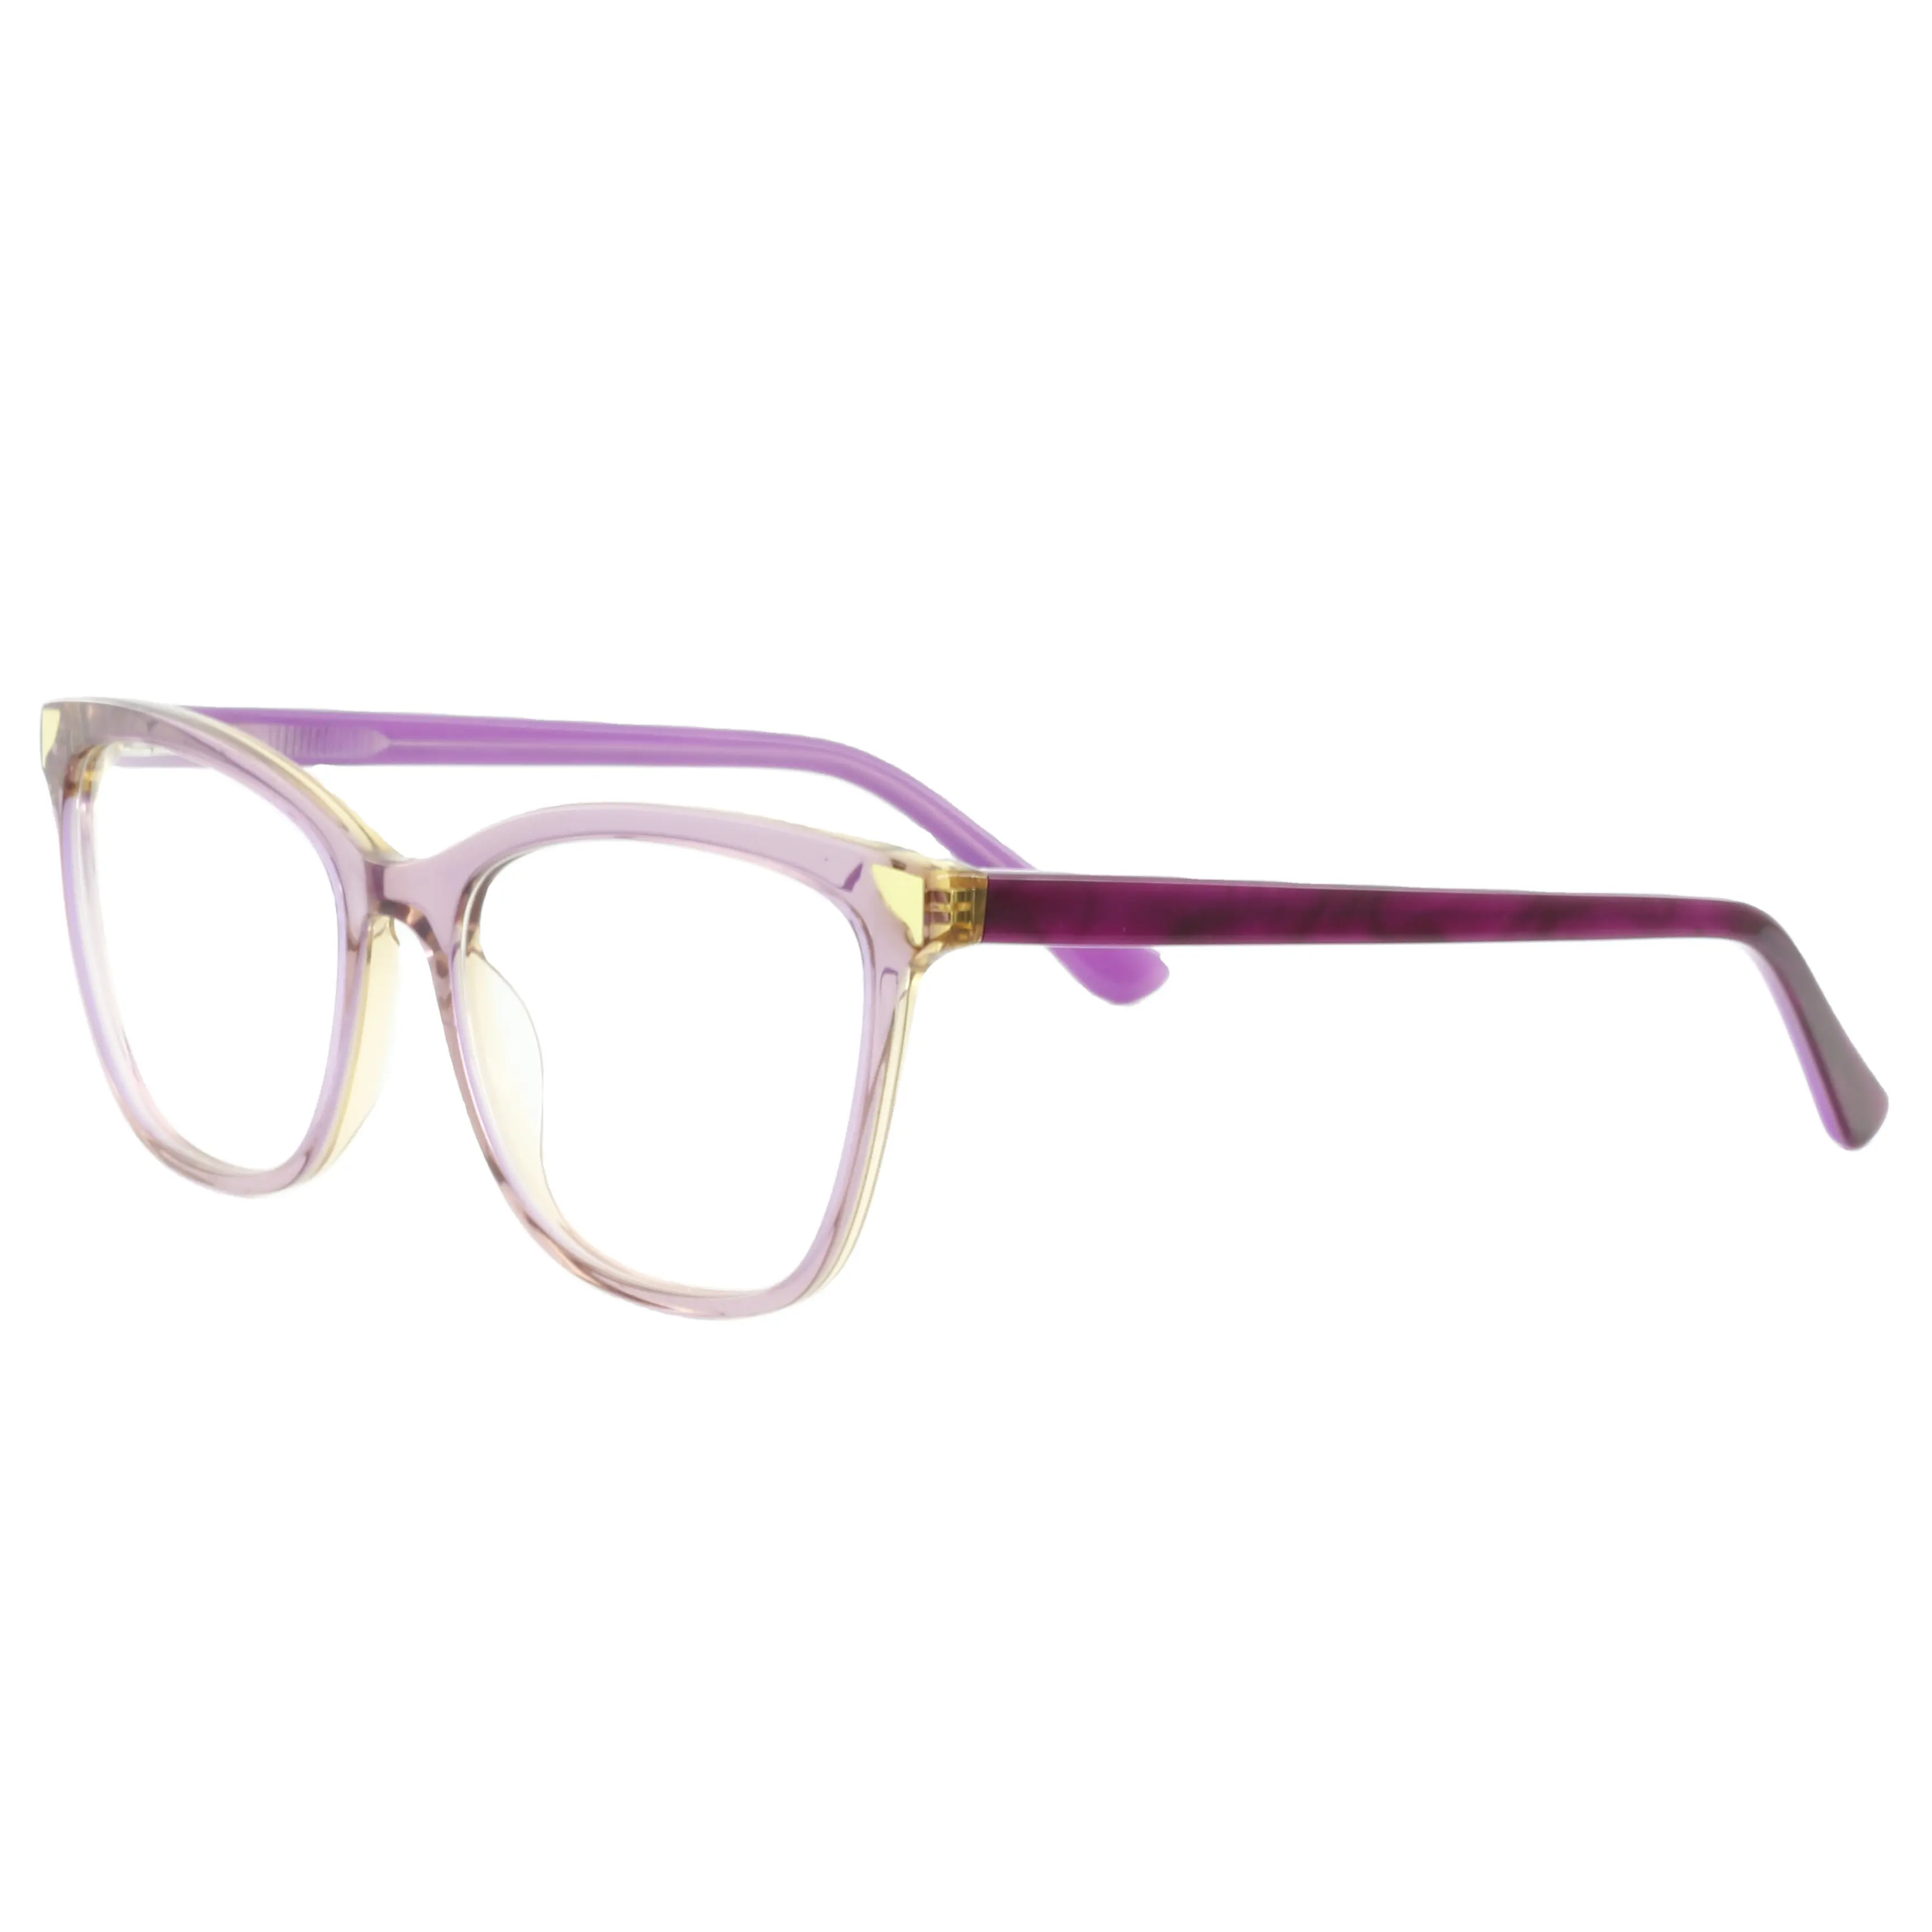 Fancy vogue acetate optical frames eyewear glasses